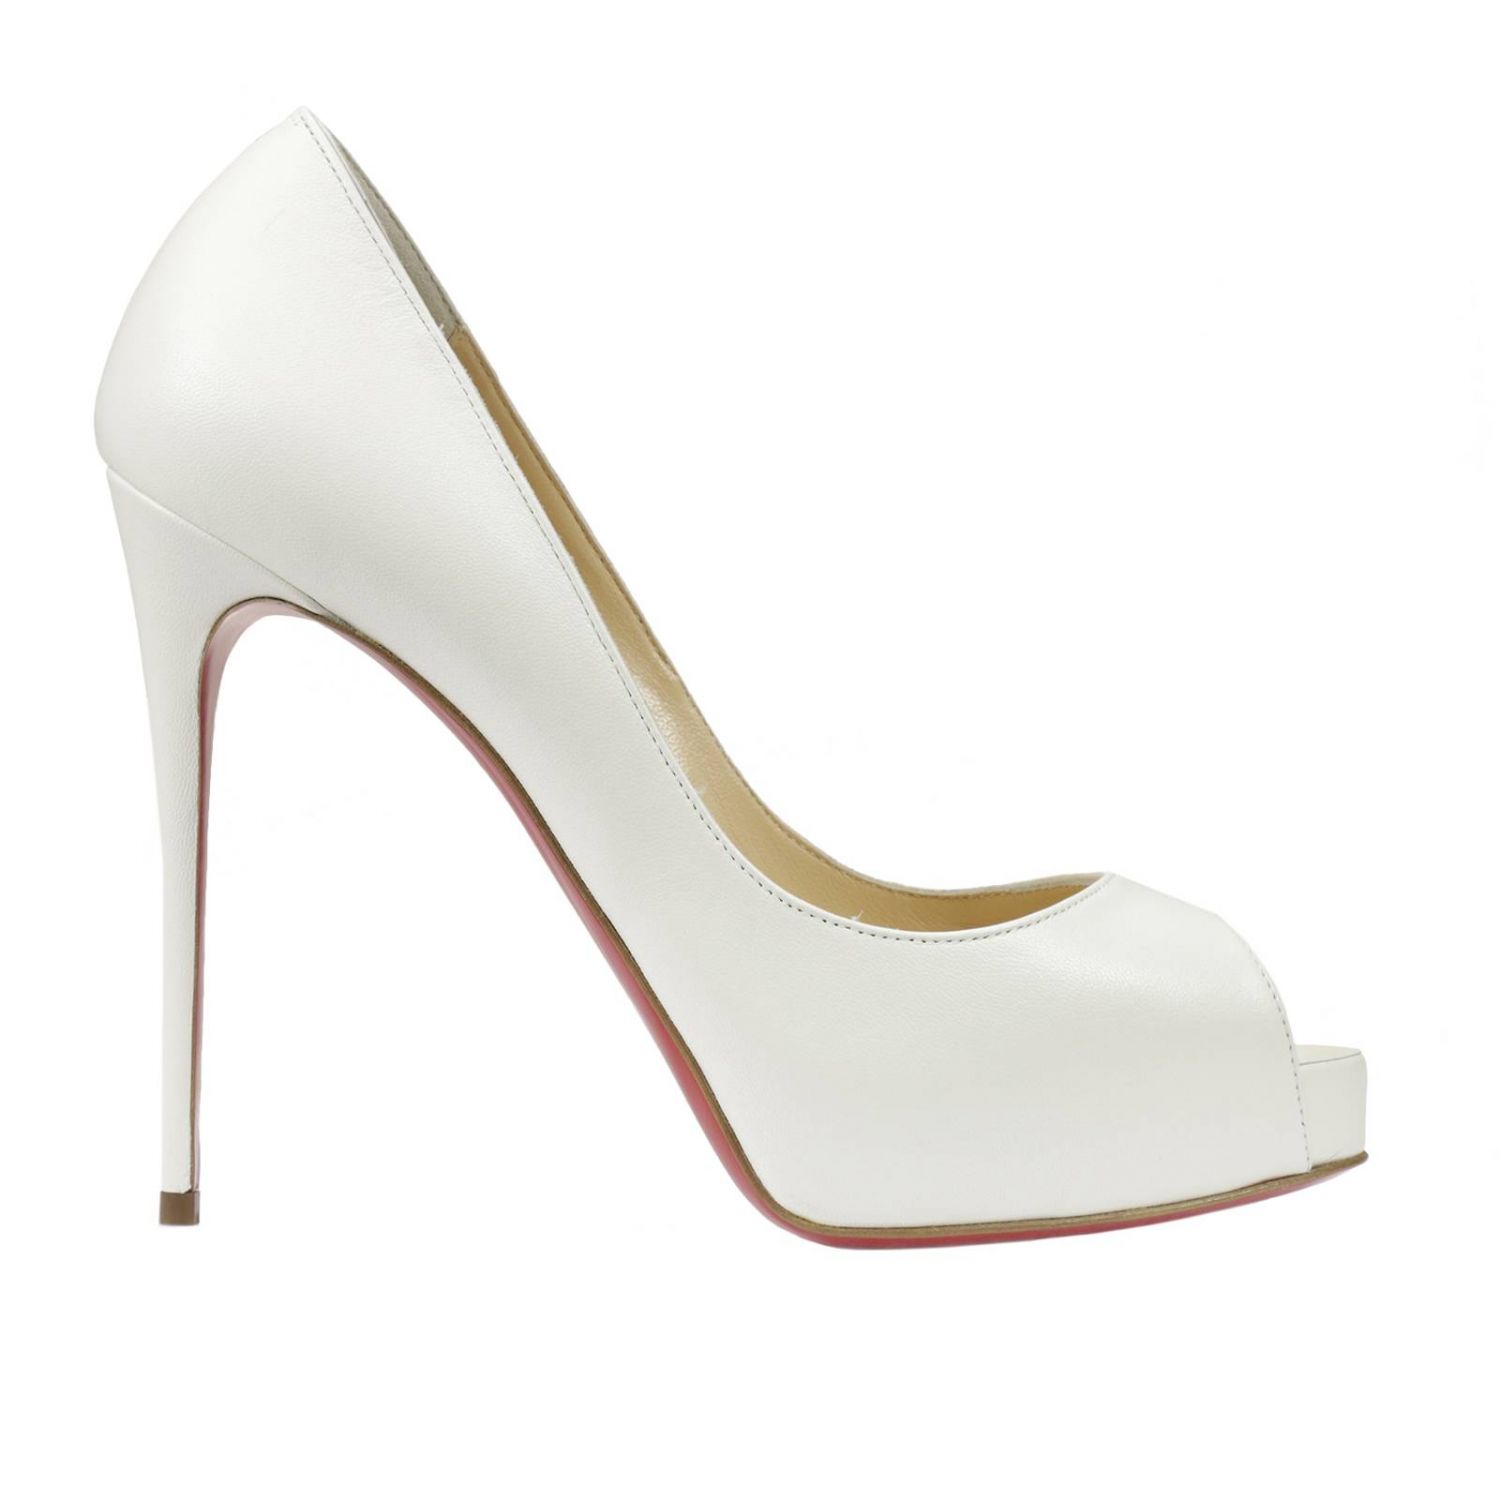 CHRISTIAN LOUBOUTIN: - White | High Heel Shoes Christian Louboutin ...